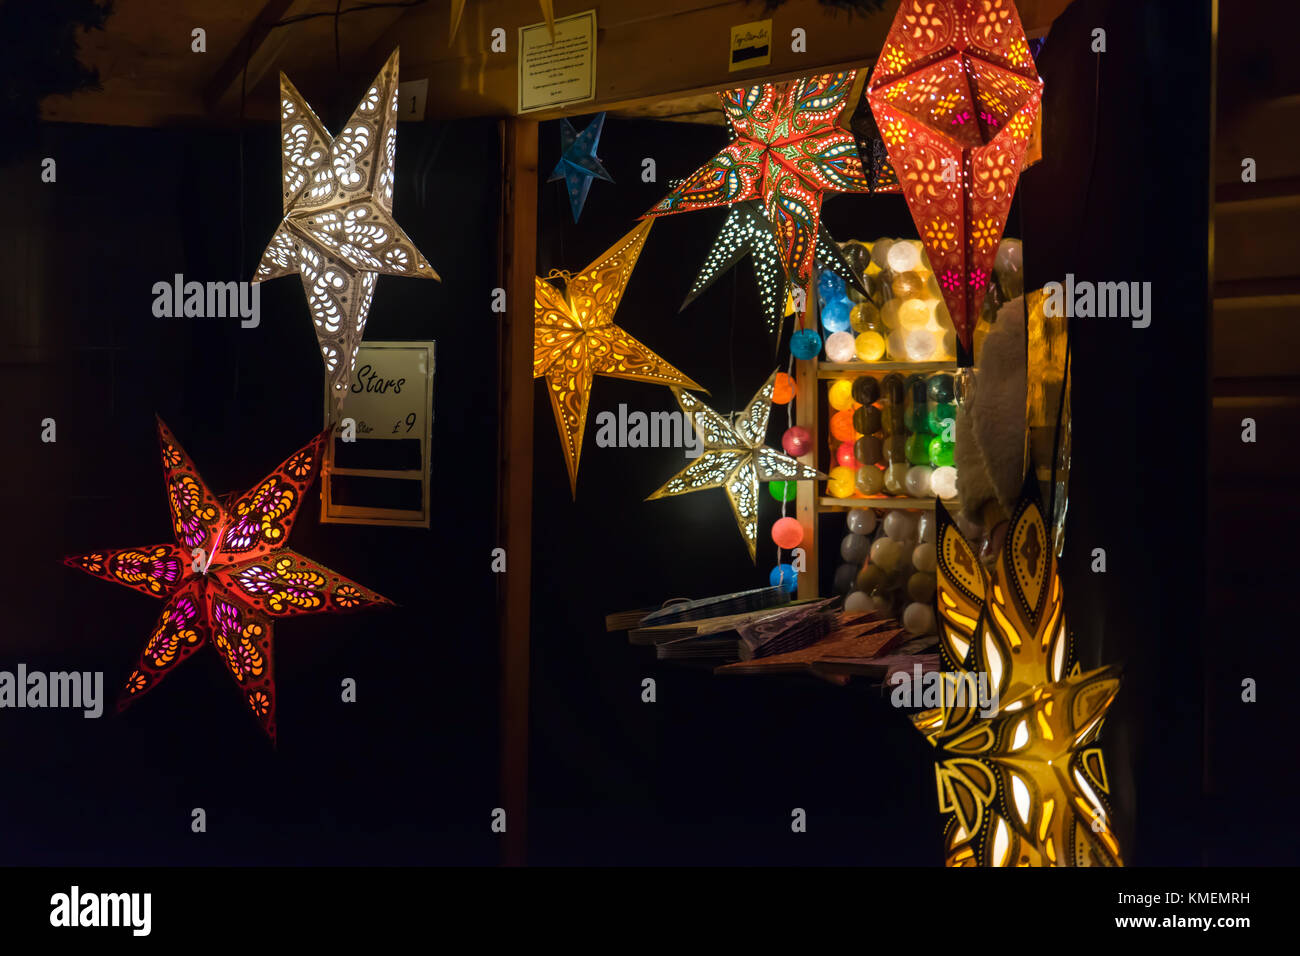 Colourful illuminated star lanterns at Winchester Christmas Market, Winchester, England UK Stock Photo